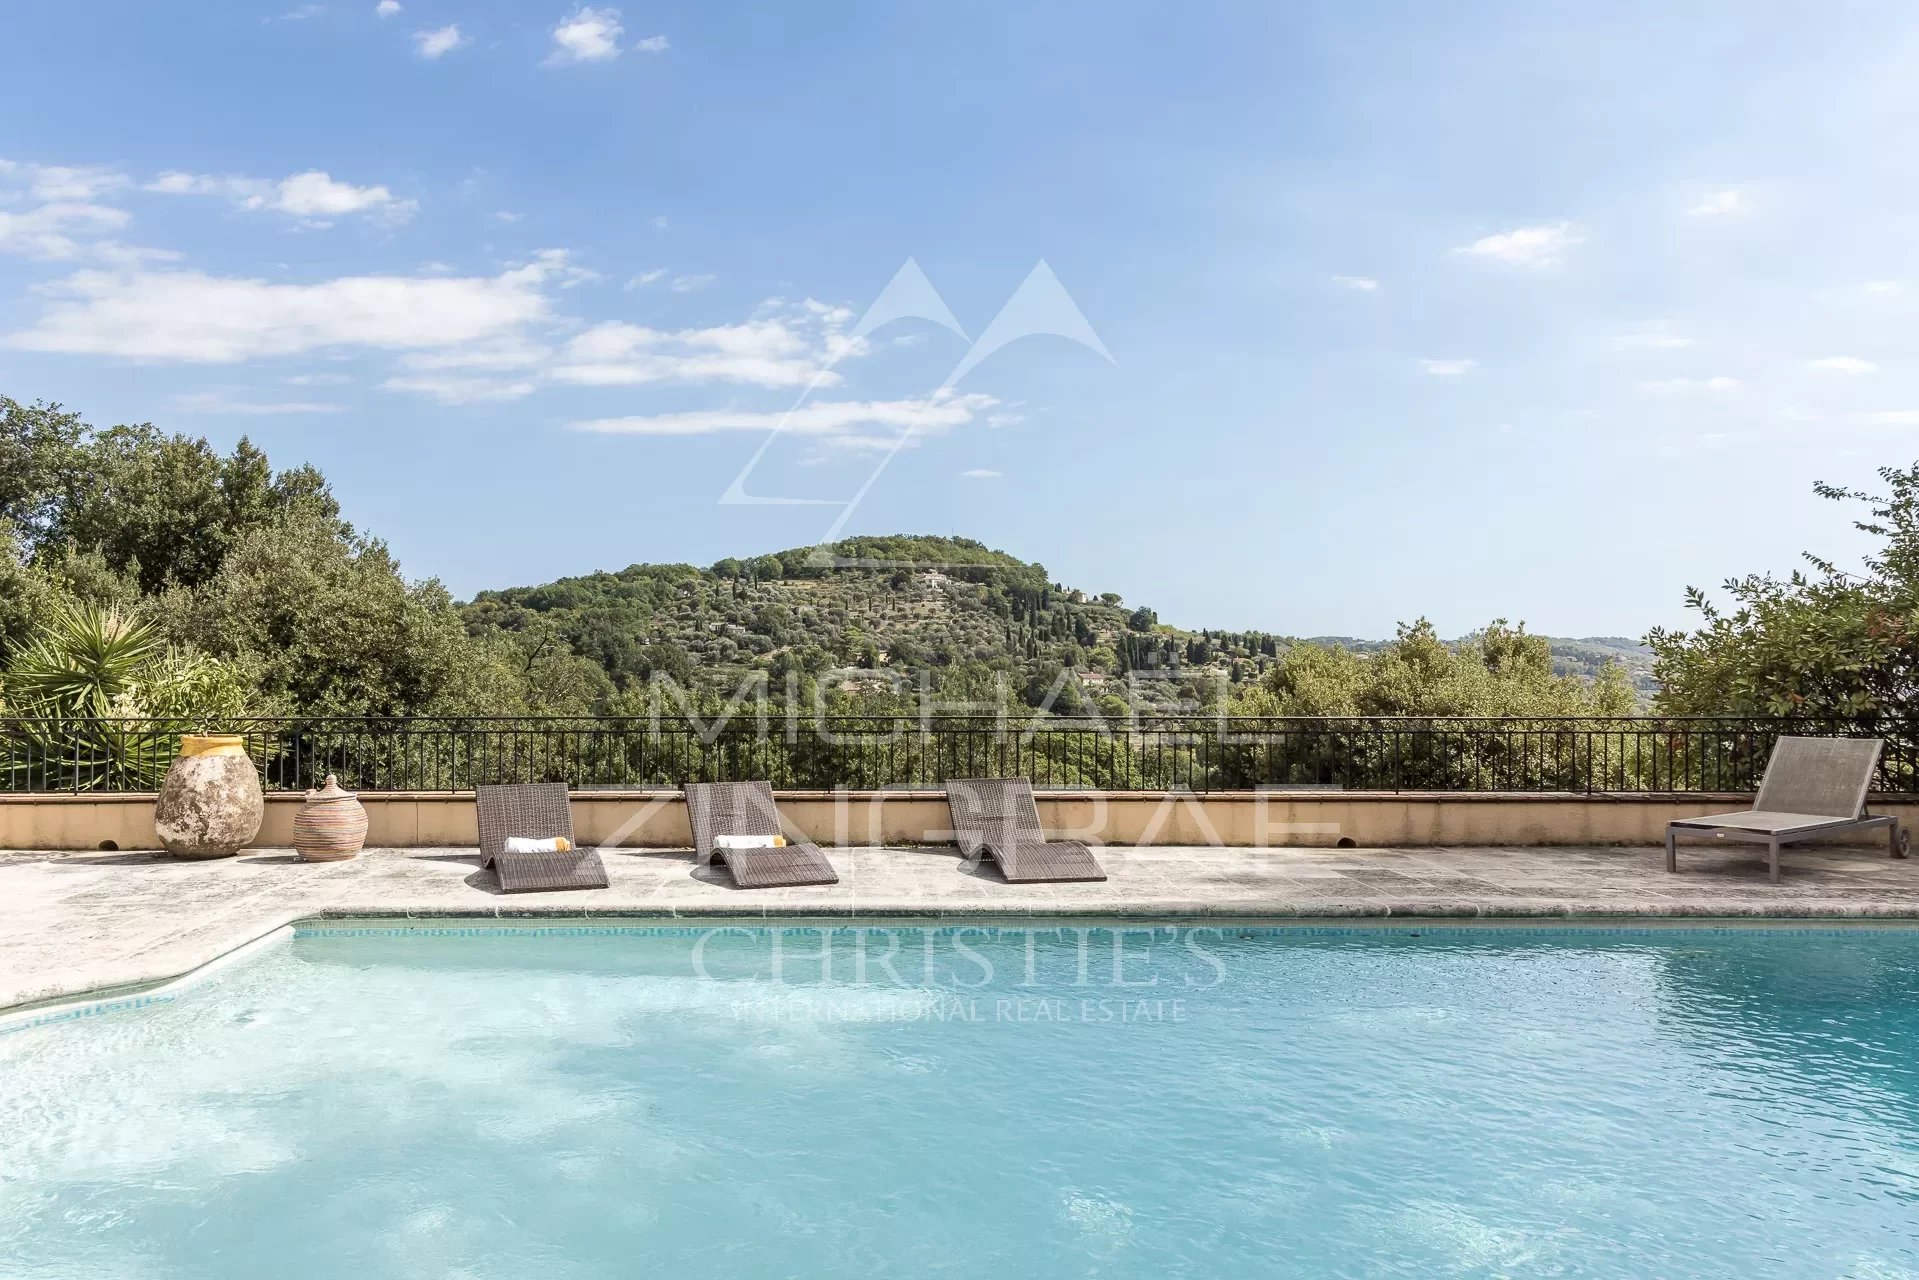 Entzückendes provenzalisches Haus mit panoramischem Meerblick